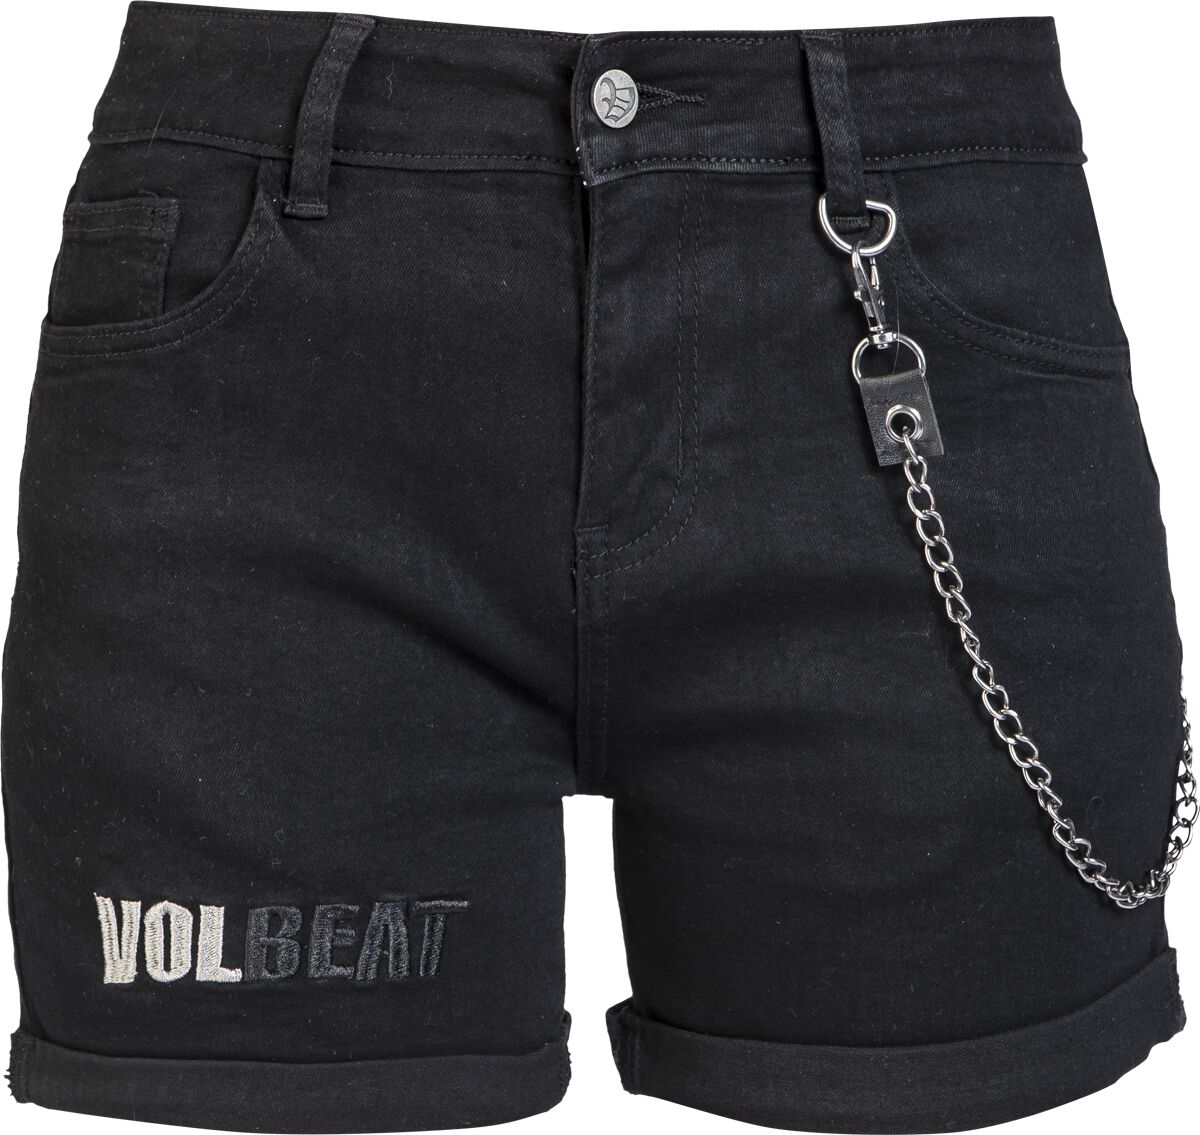 Volbeat - EMP Signature Collection - Hotpant - schwarz - EMP Exklusiv!